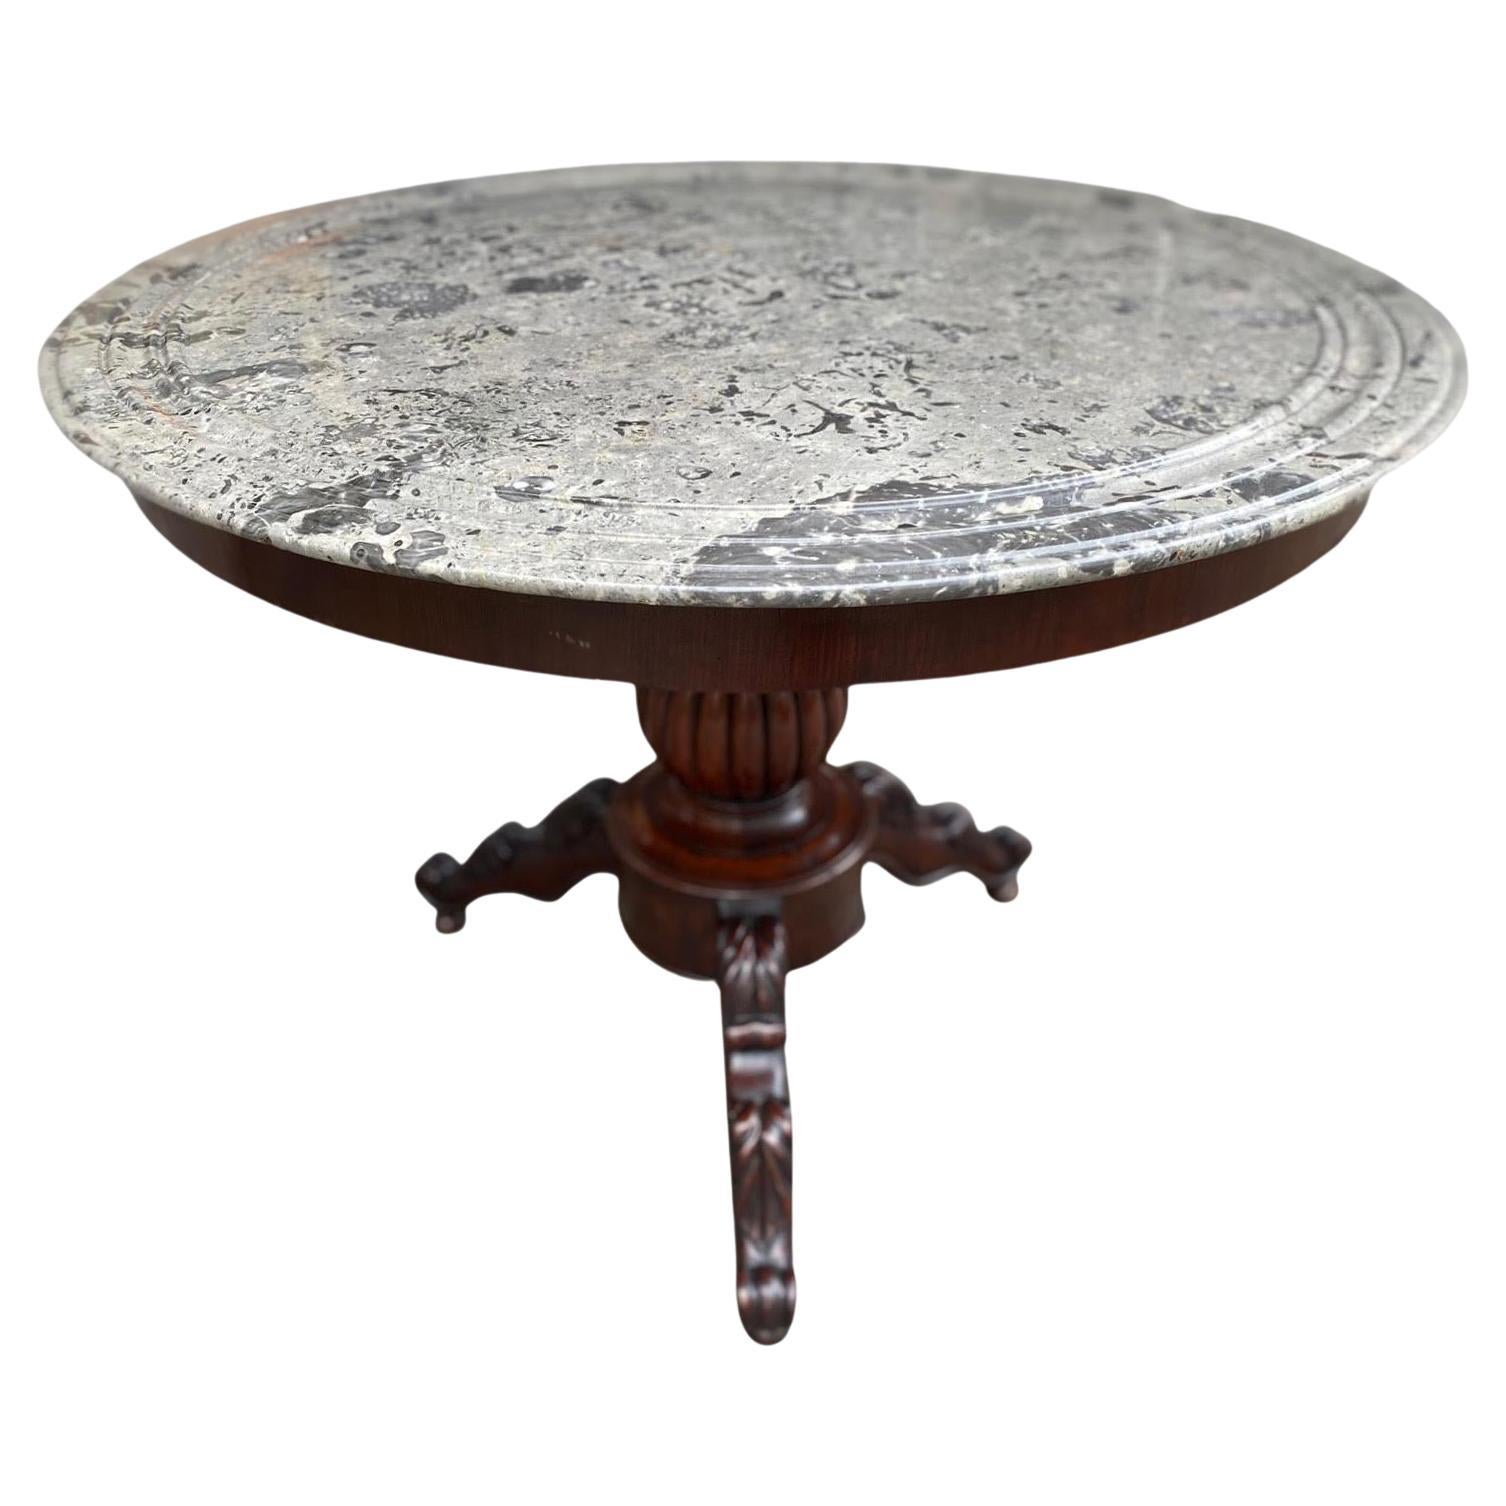 19th Century French Mahogany and Marble Top Gueridon Table